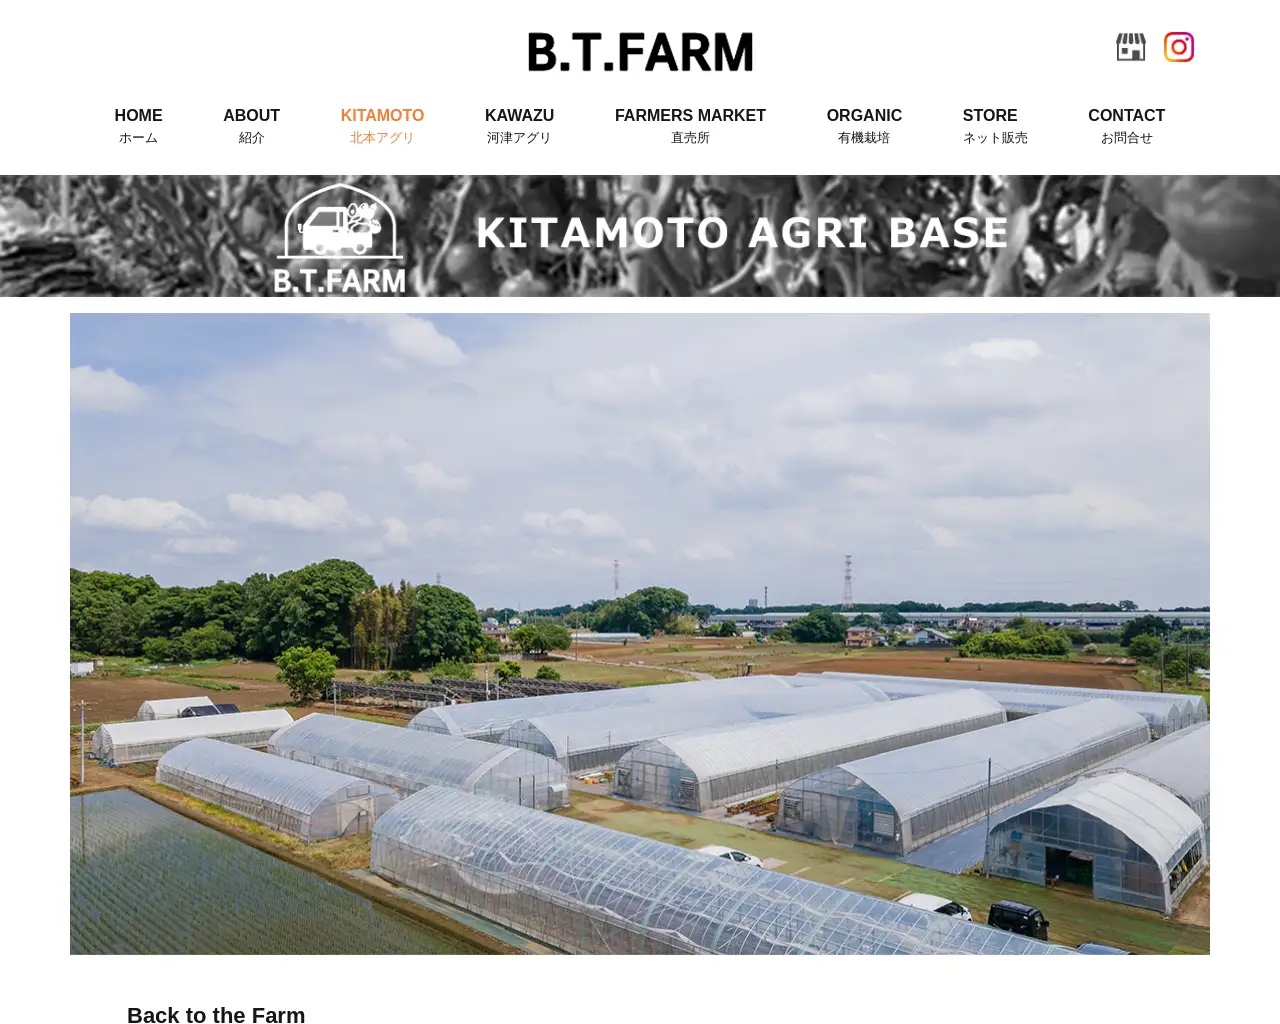 B.T.Farm KITAMOTO AGRI CENTER site